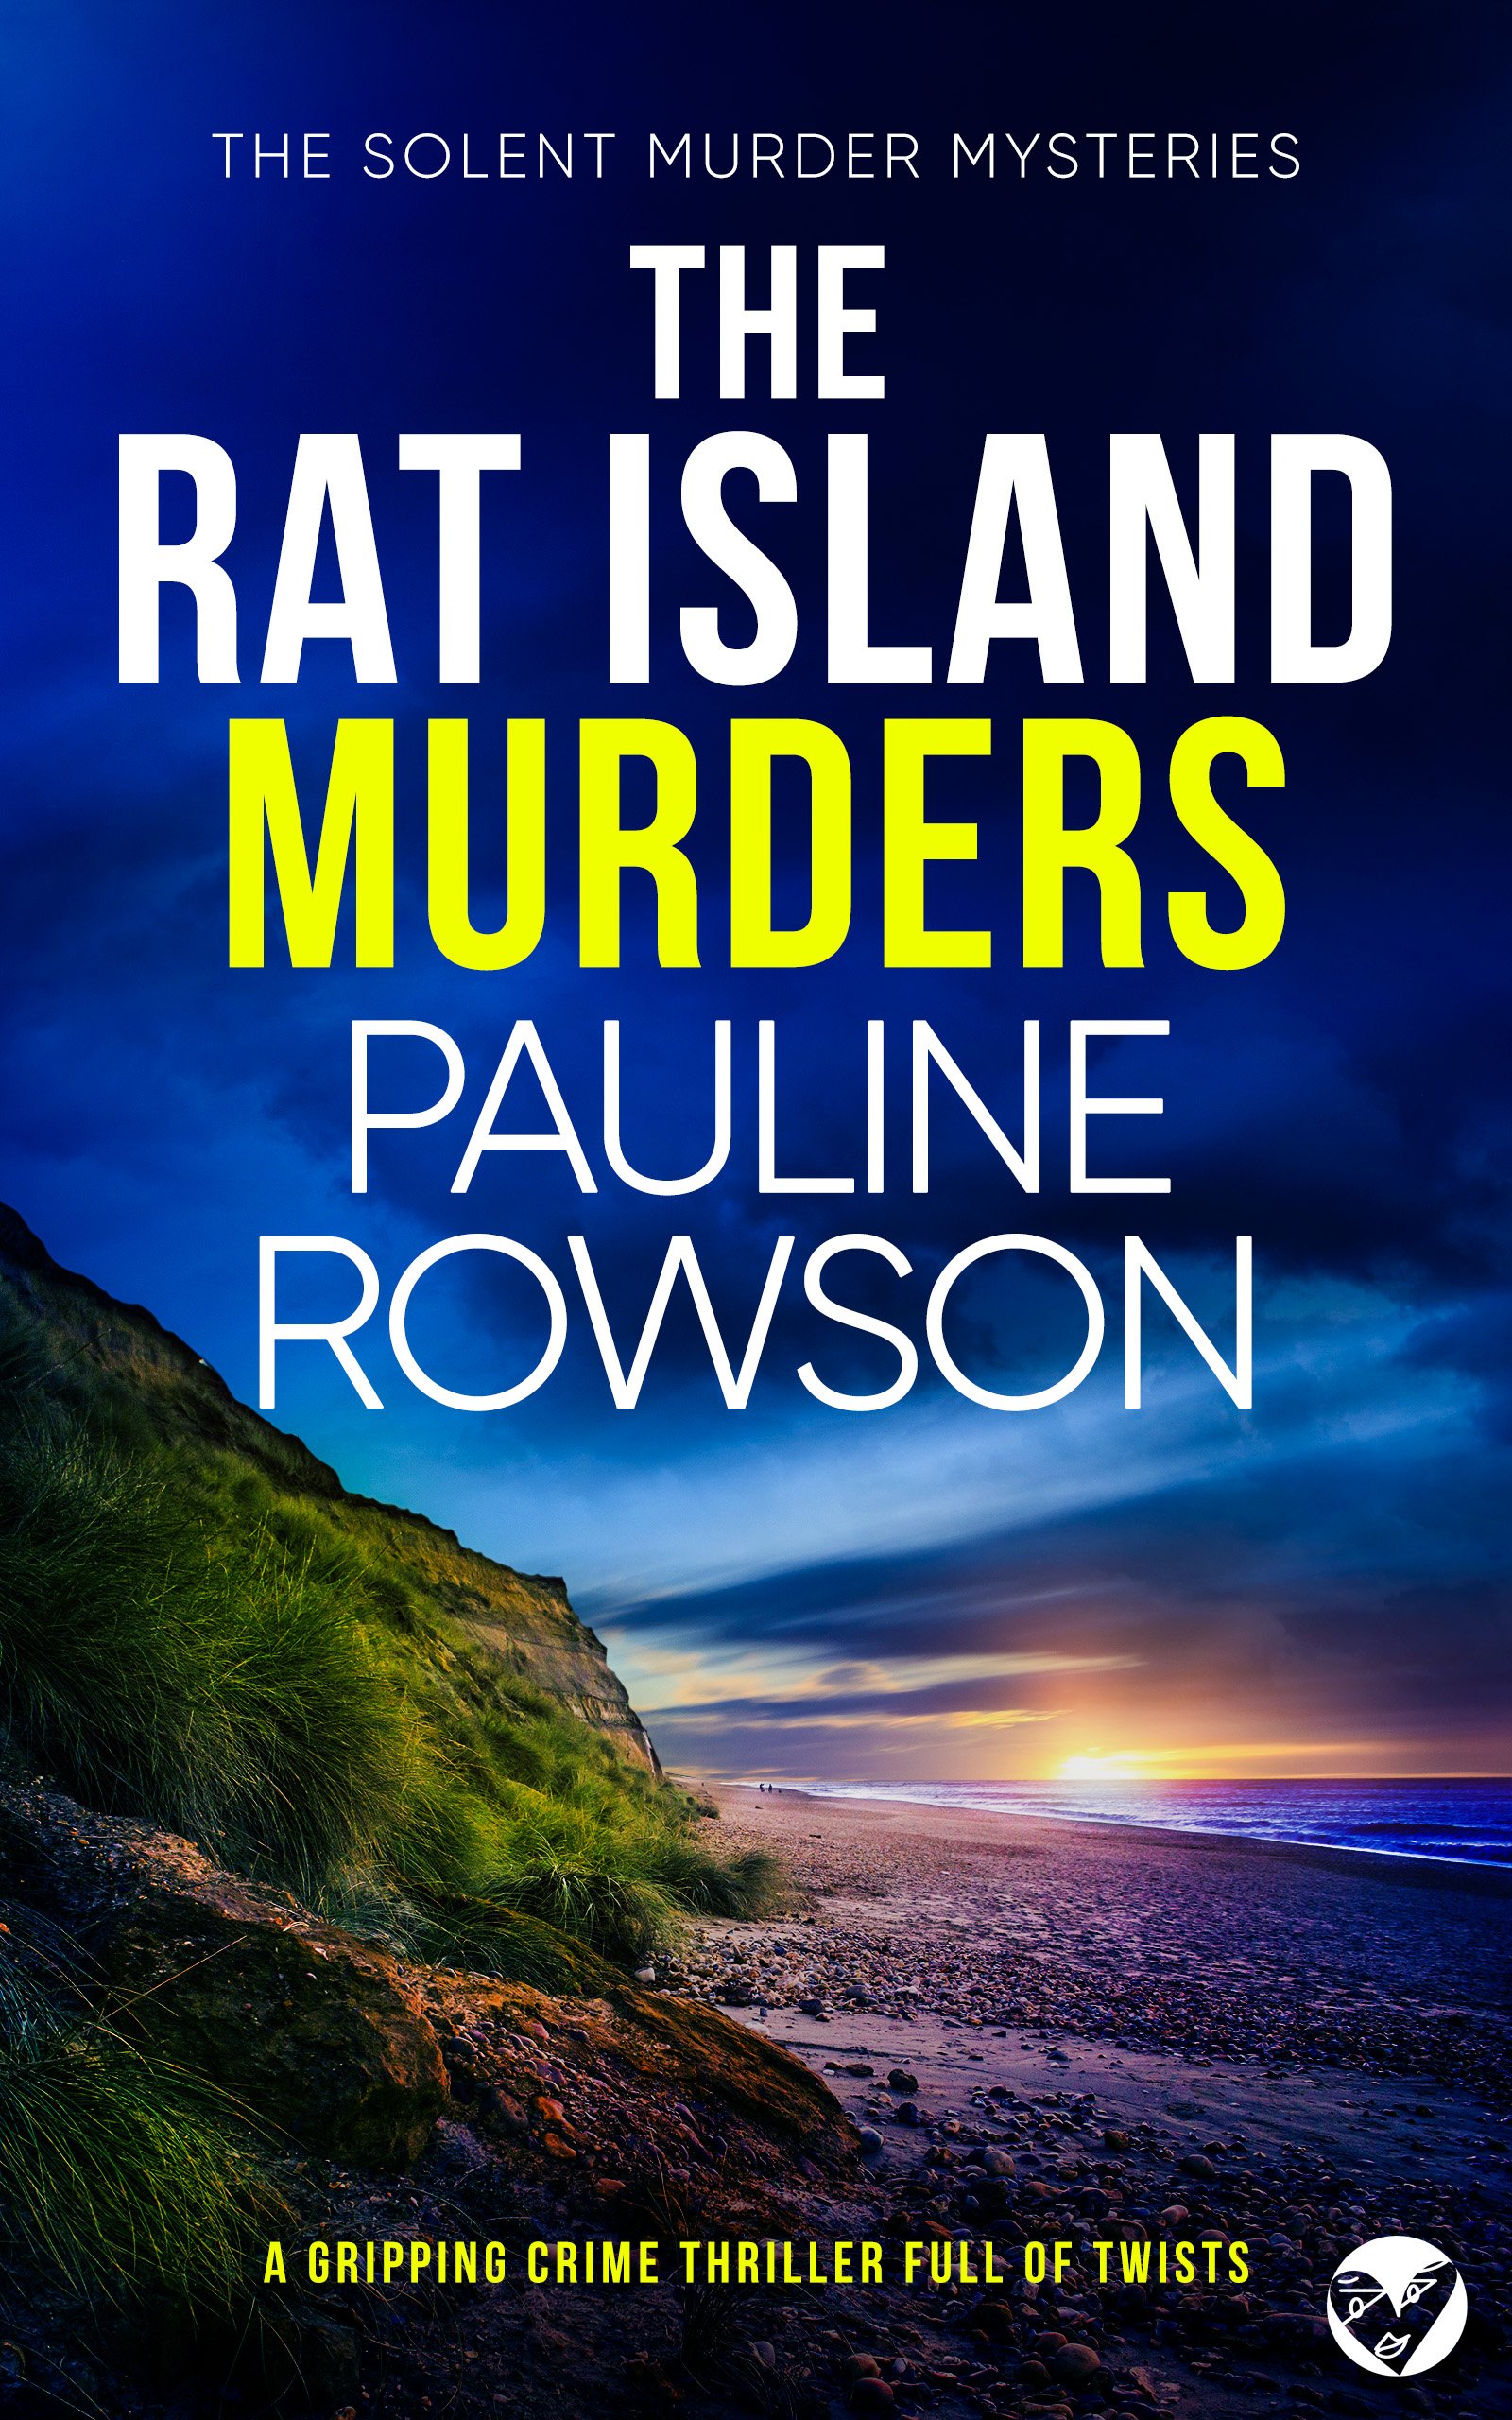 THE RAT ISLAND MURDERS Cover publish.jpg